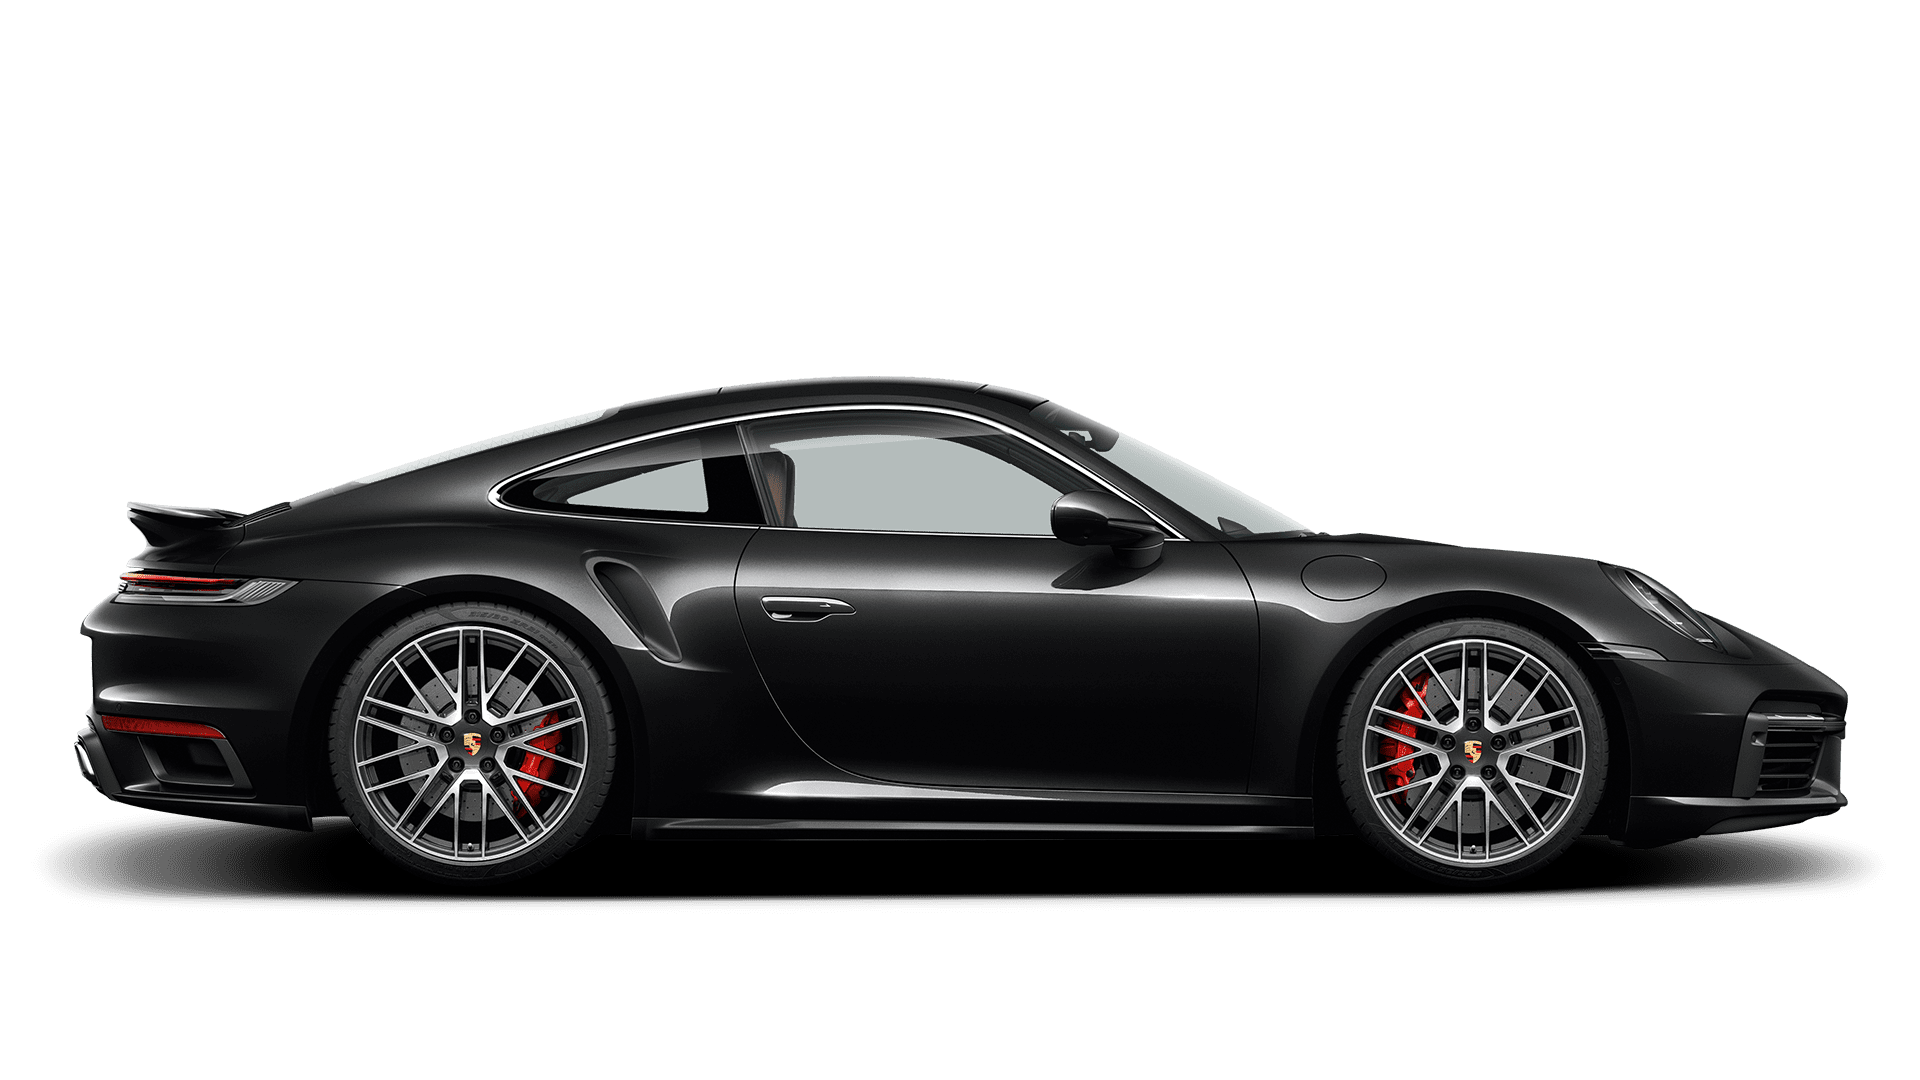 Porsche 911 Finance - Lease & Hire Purchase Offers | JBR Capital